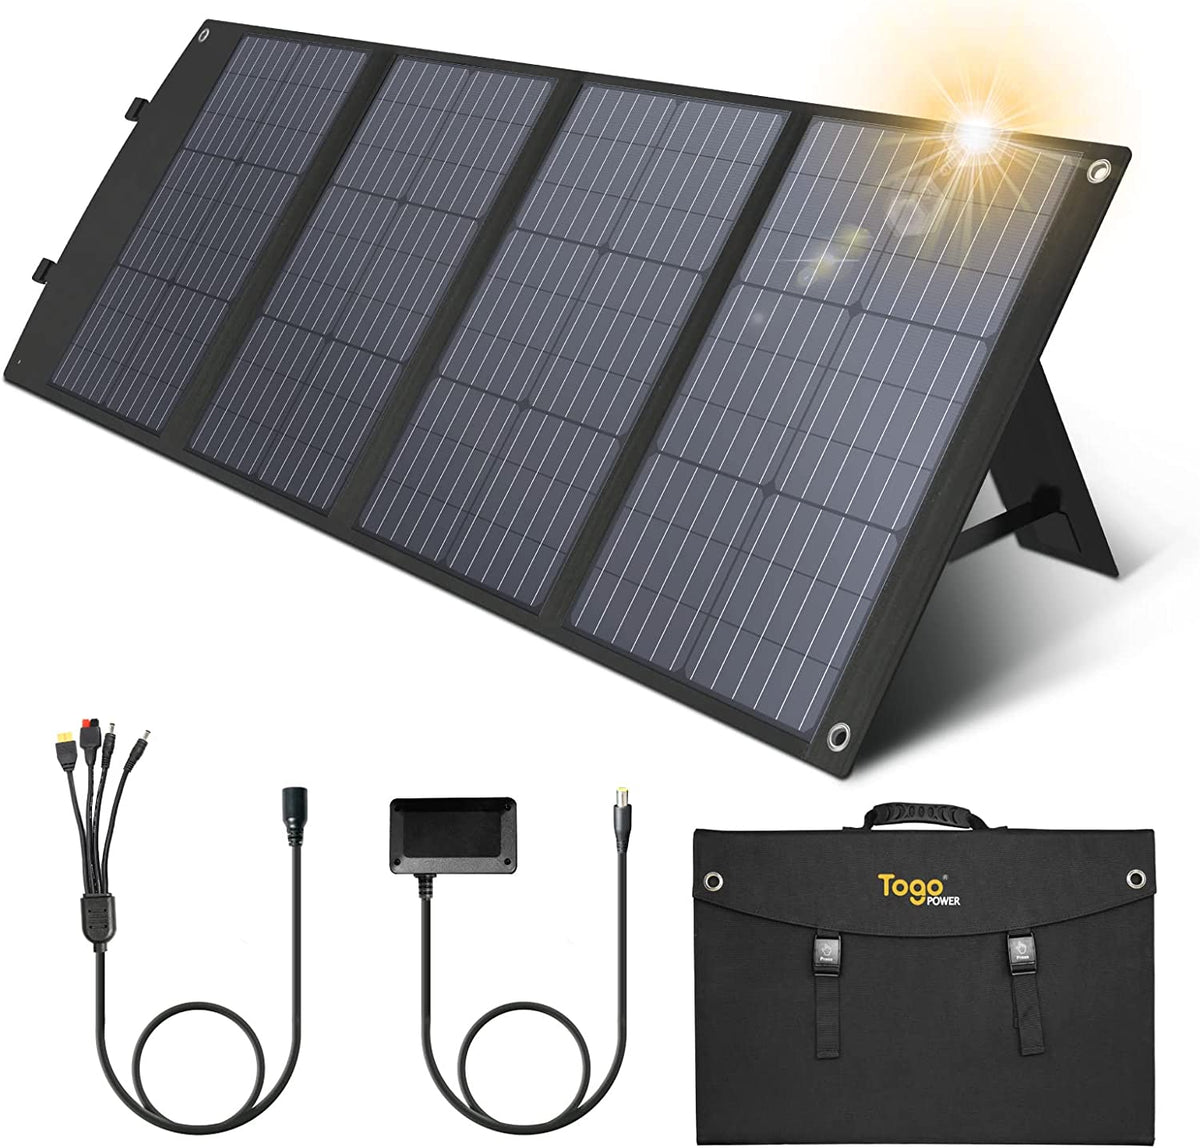 Evebase Go 120 Portable Solar Panel